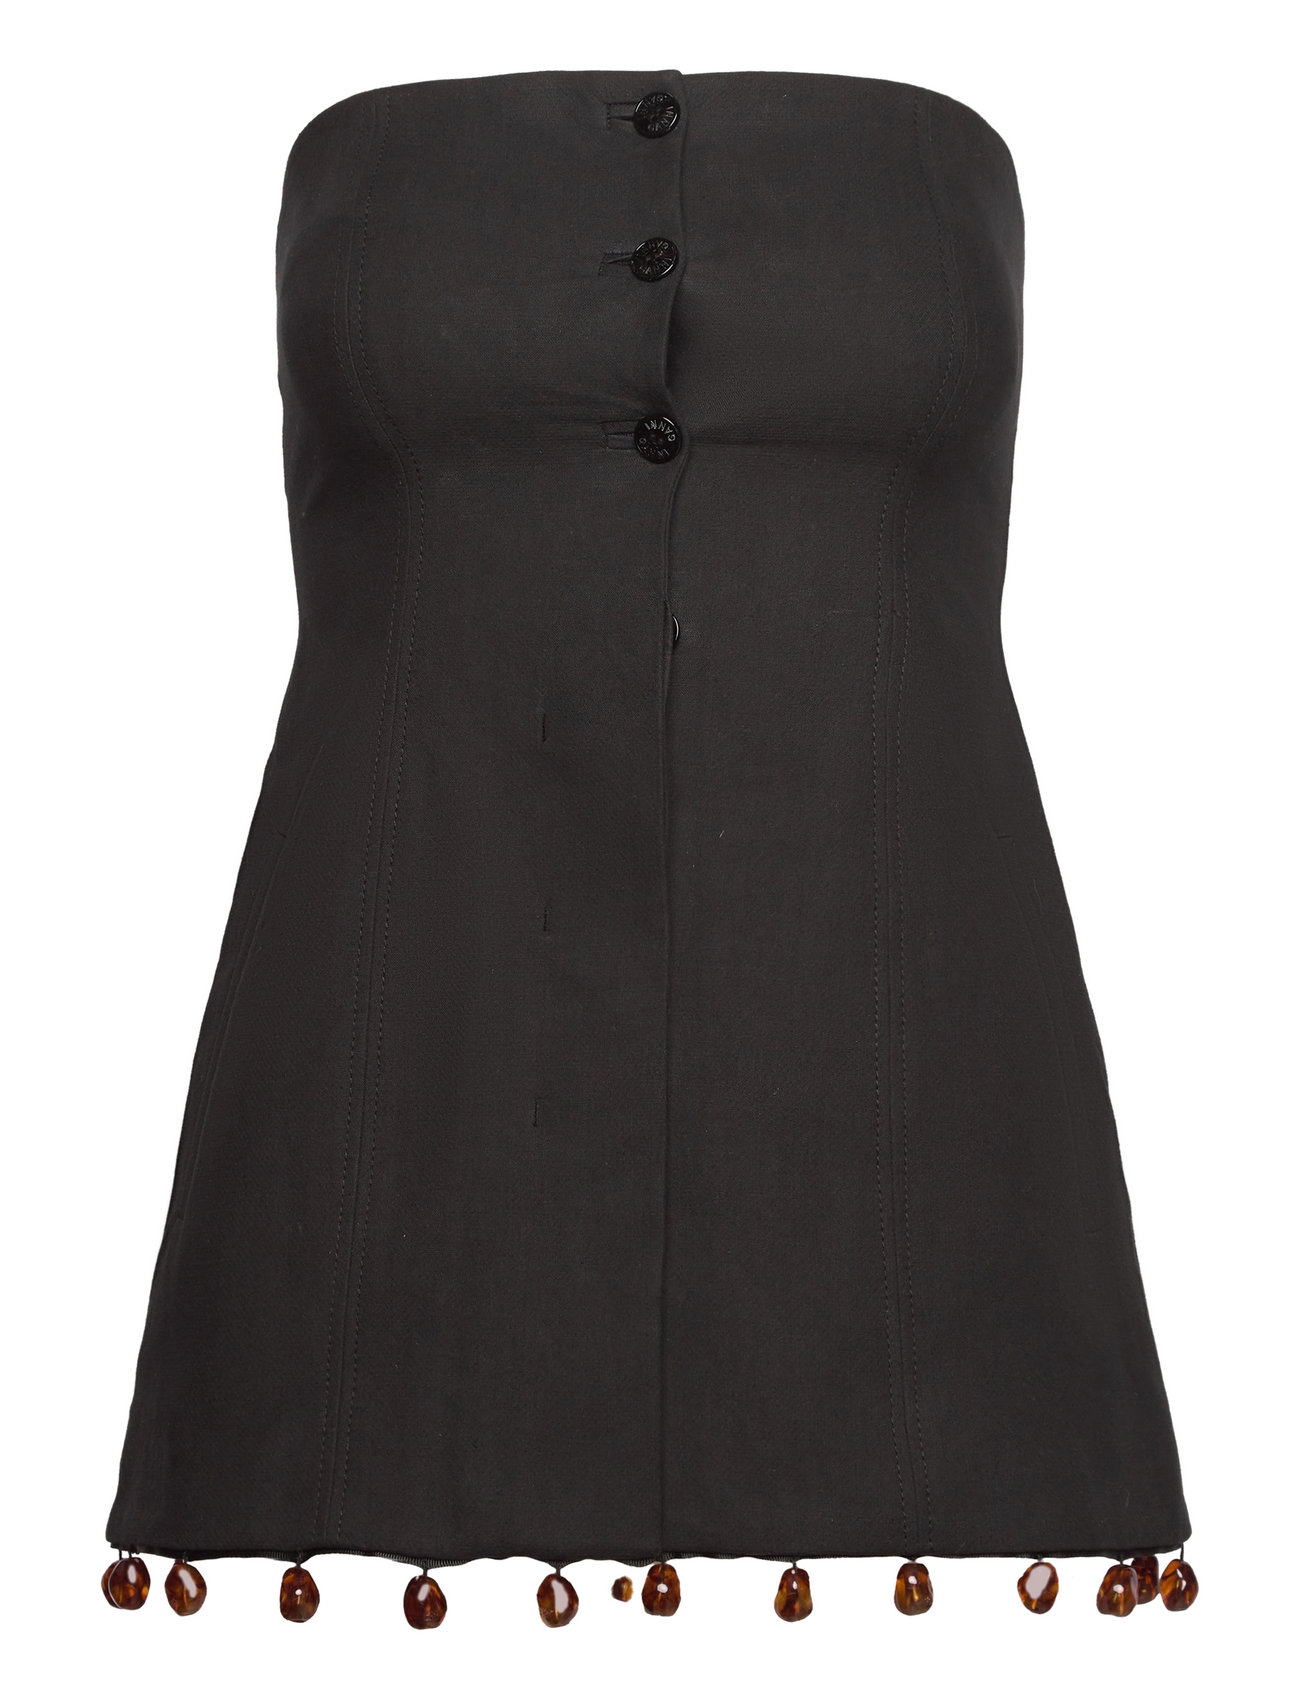 Cotton Suiting Sleeveless Top Tops T-shirts & Tops Sleeveless Black Ganni